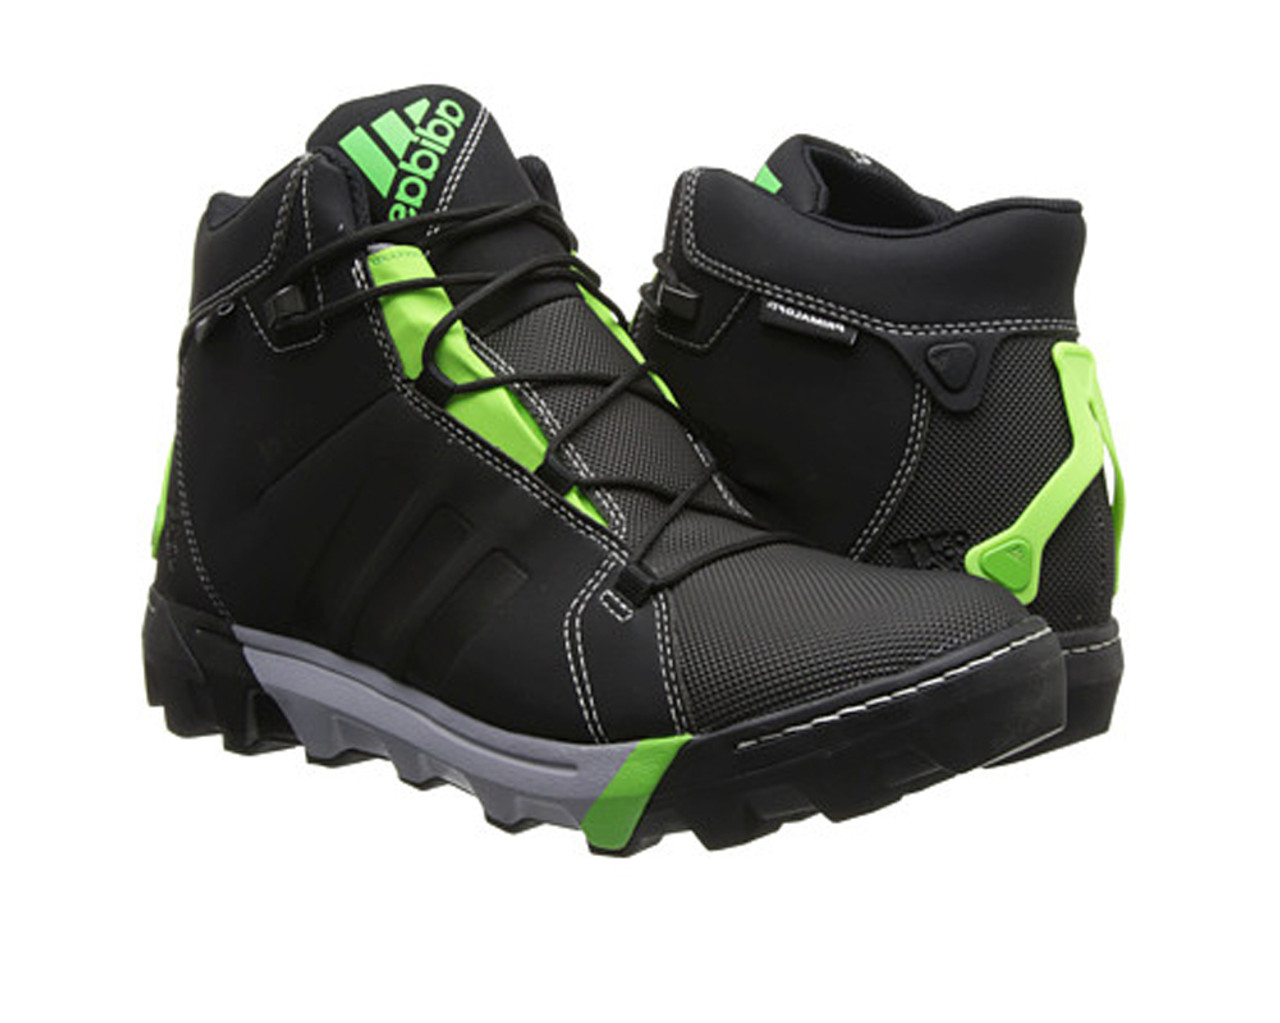 Adidas Men's CP Primaloft Snow Hiker - Black | Discount Adidas Men's Athletic Shoes & More - Shoolu.com | Shoolu.com